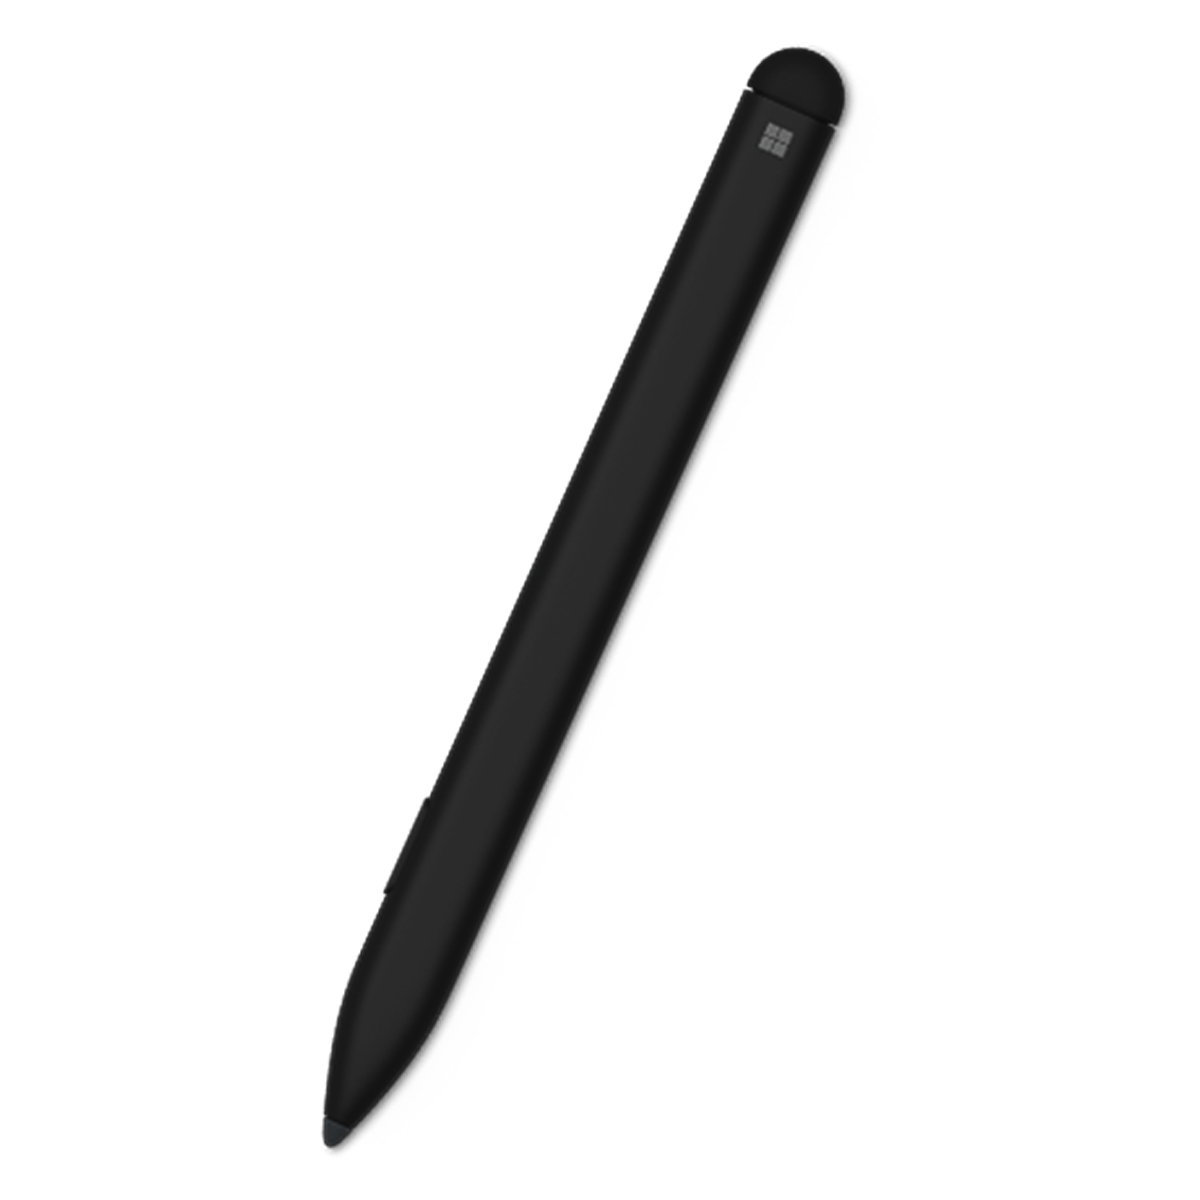 Microsoft Slim Pen 2